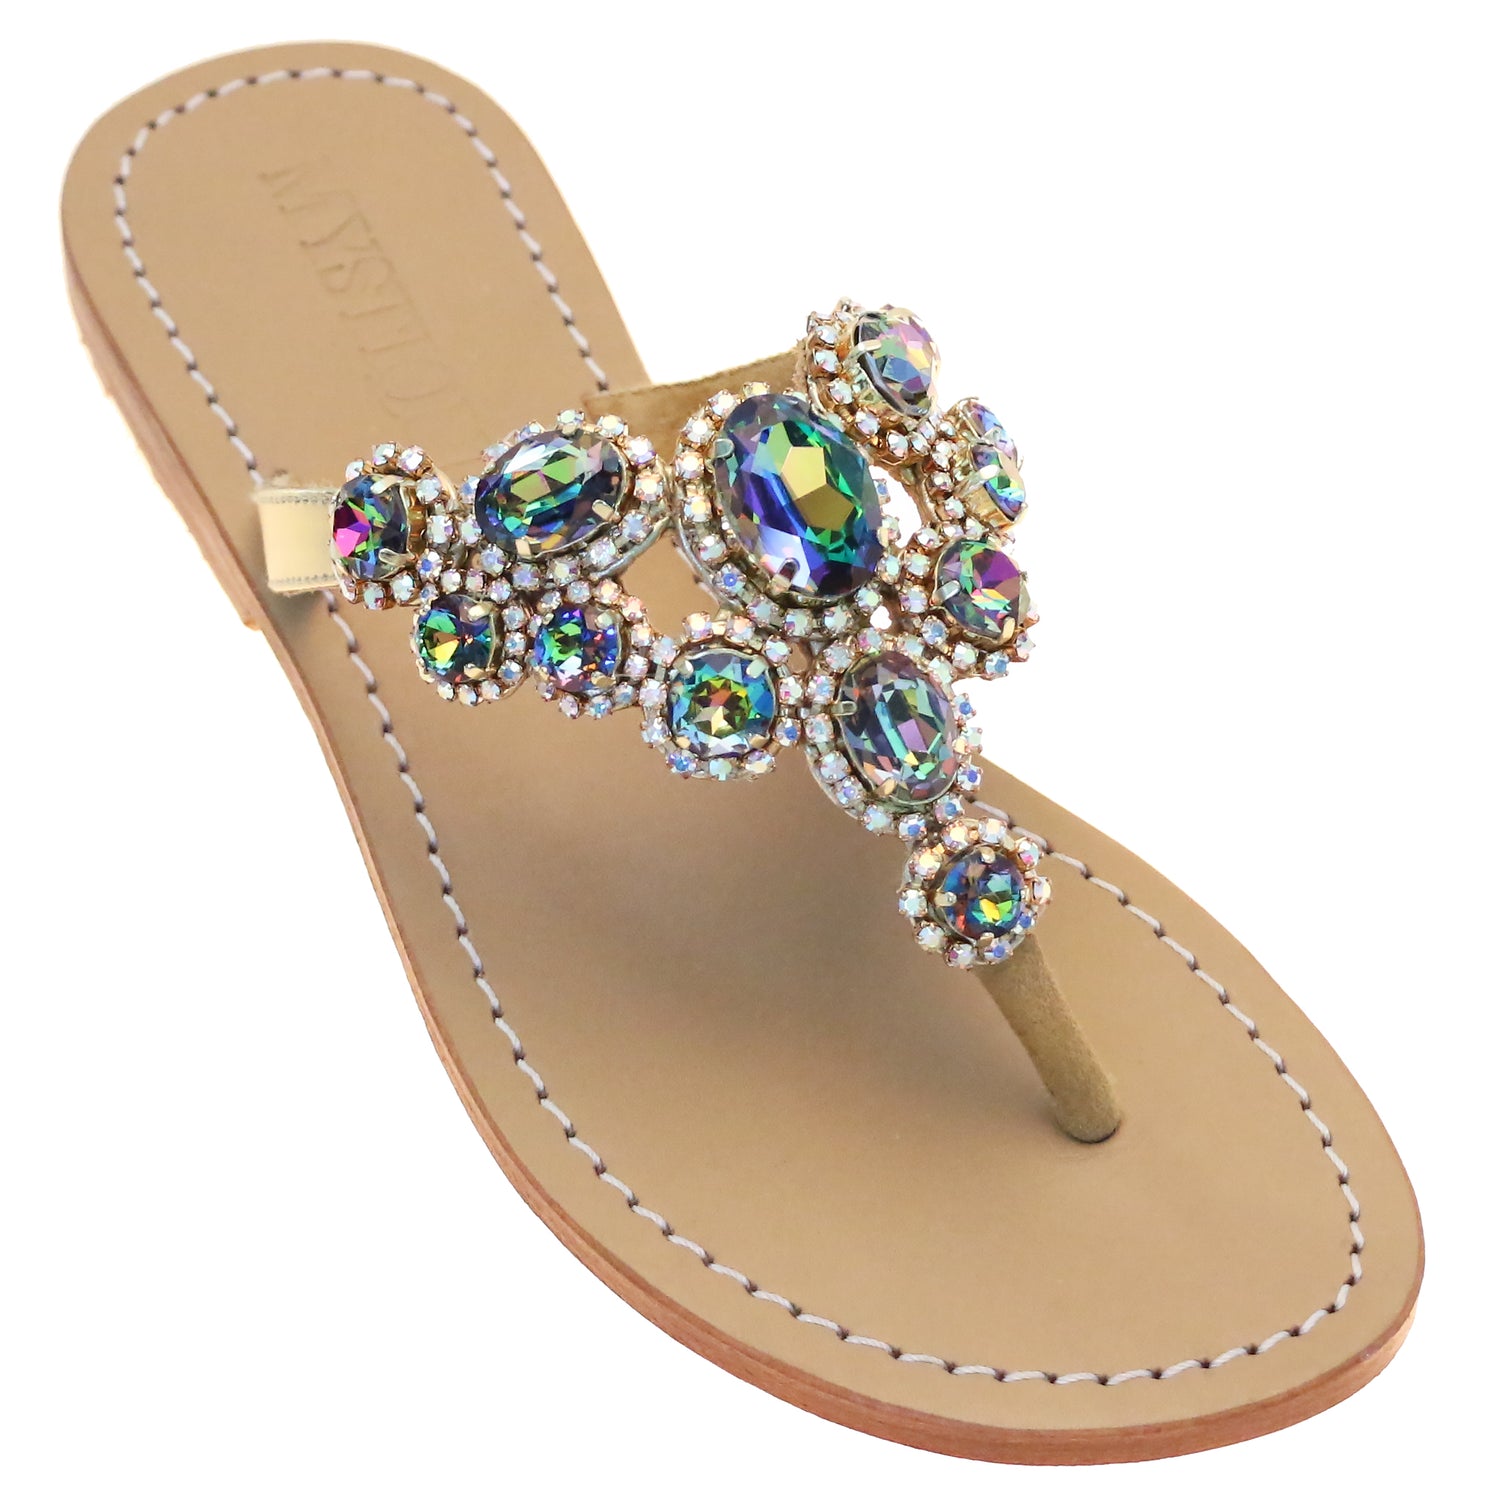 jeweled slippers